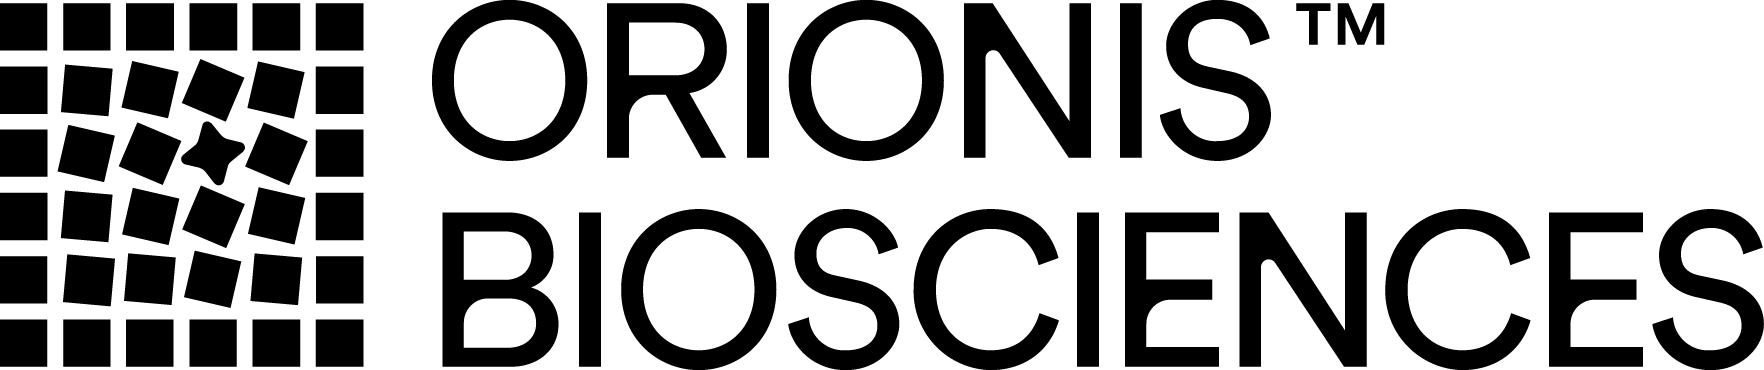 Orionis Logo print Black-01